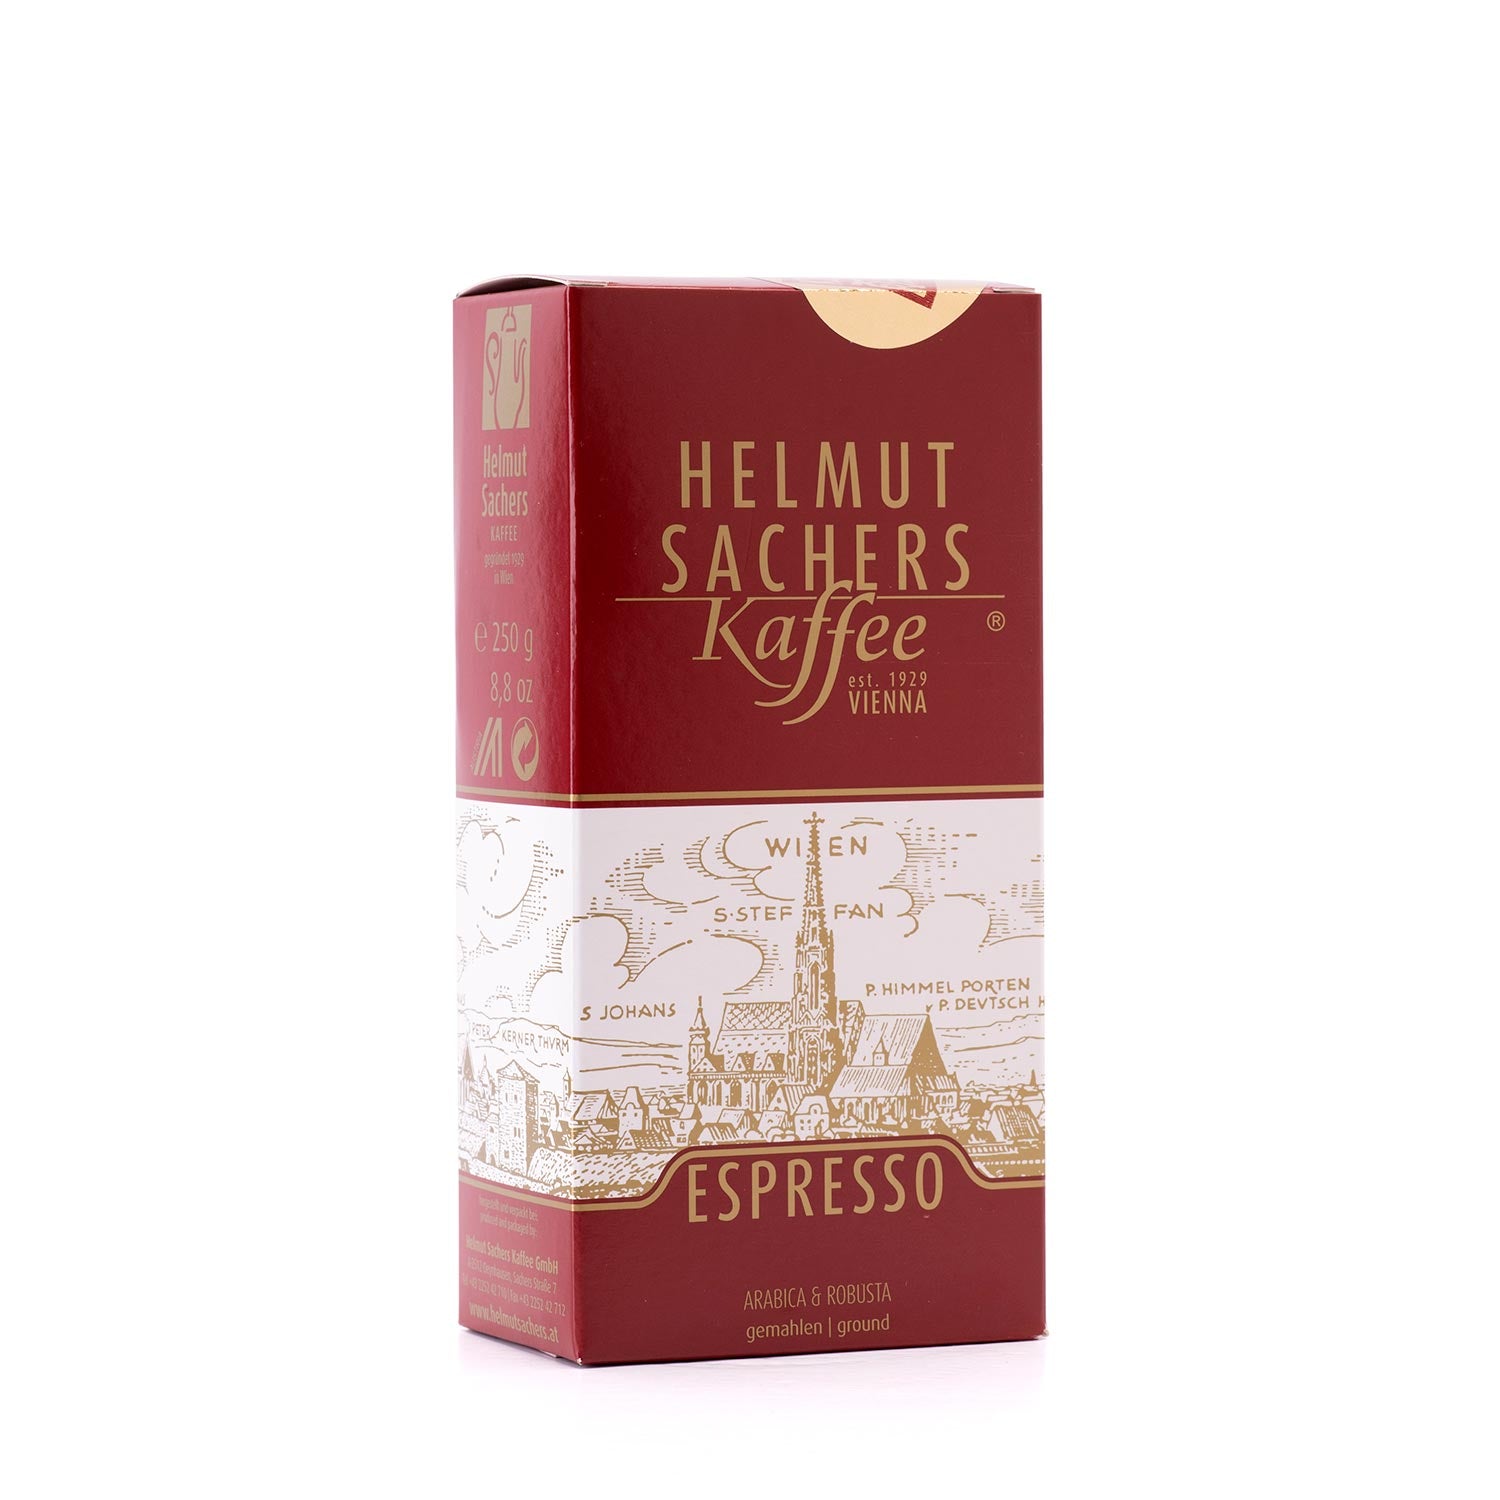 Helmut Sacher's Kaffee -  Espresso